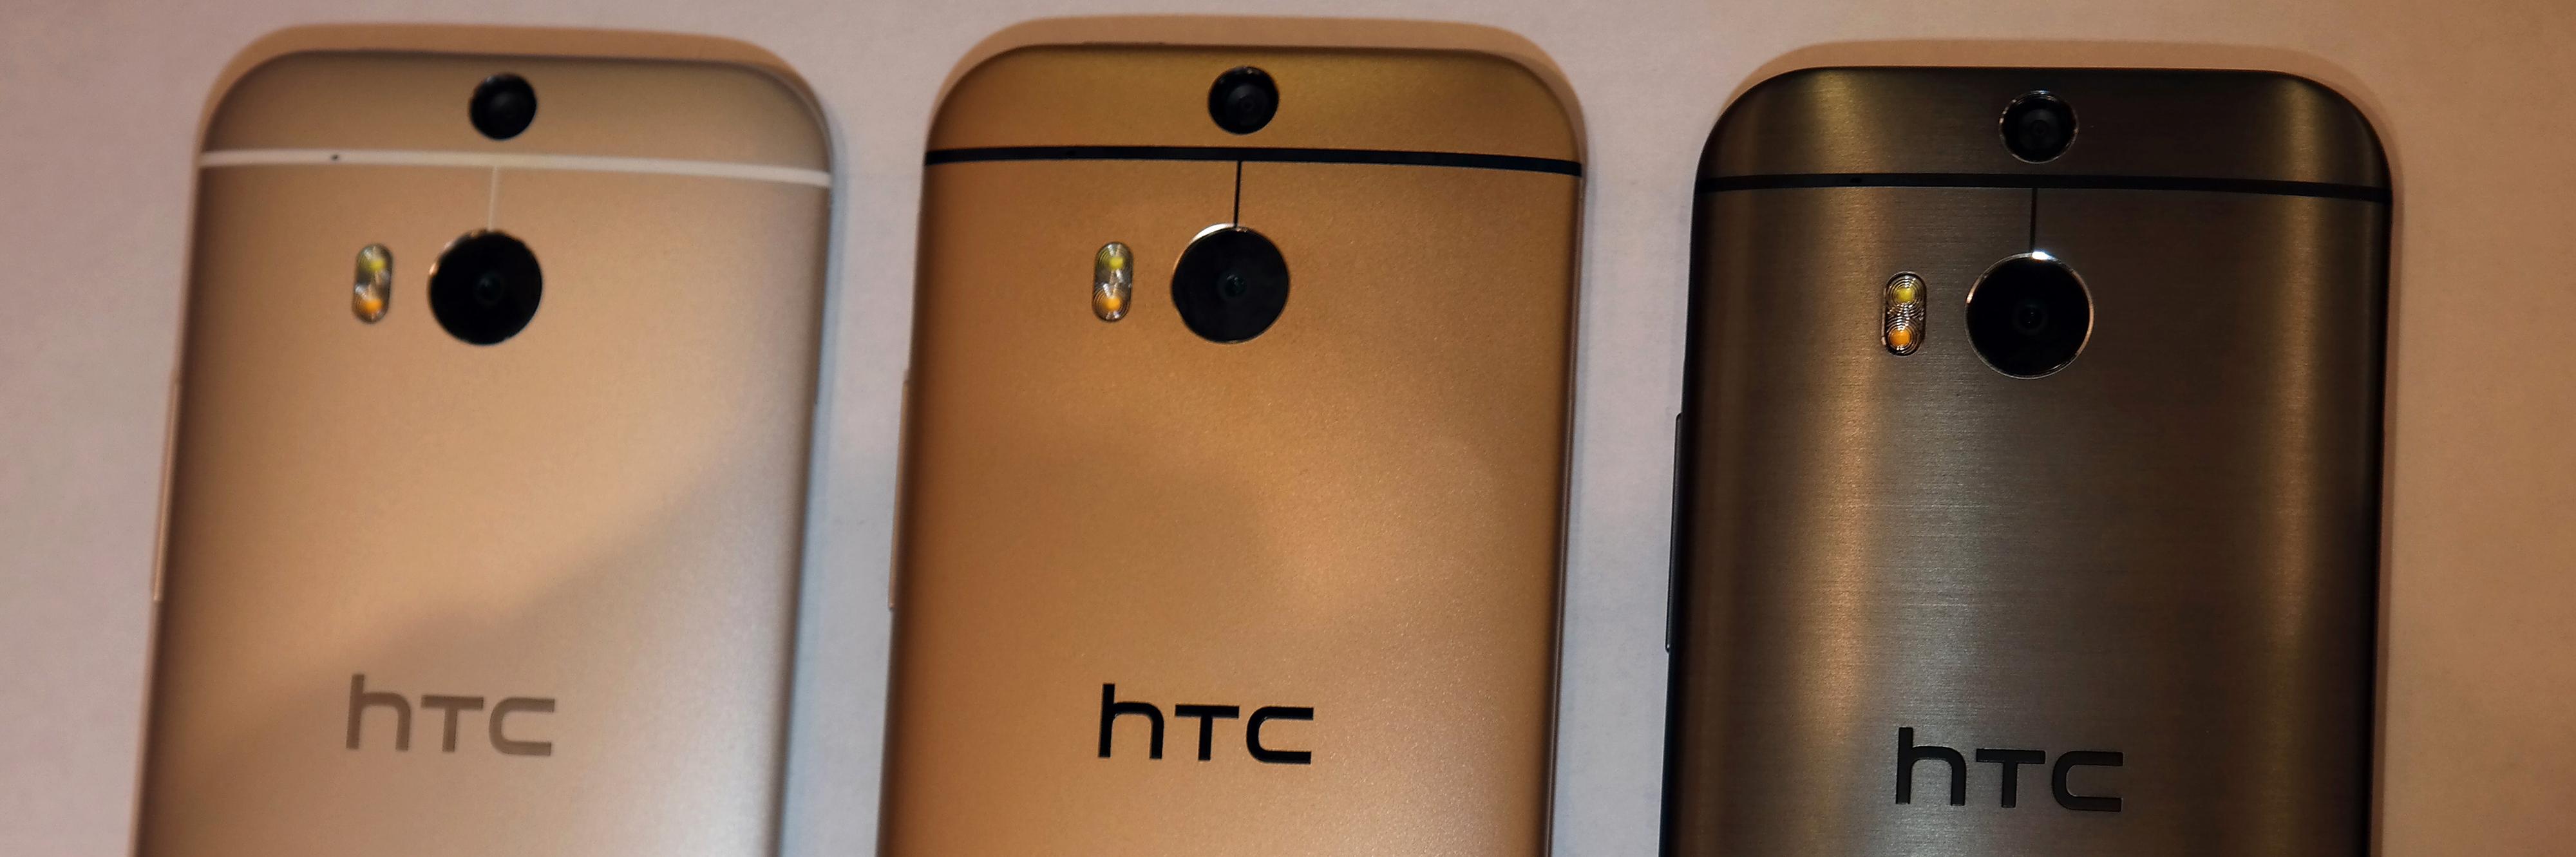 HTC One M8 kommer i tre farger.Foto: Espen Irwing Swang, Amobil.no